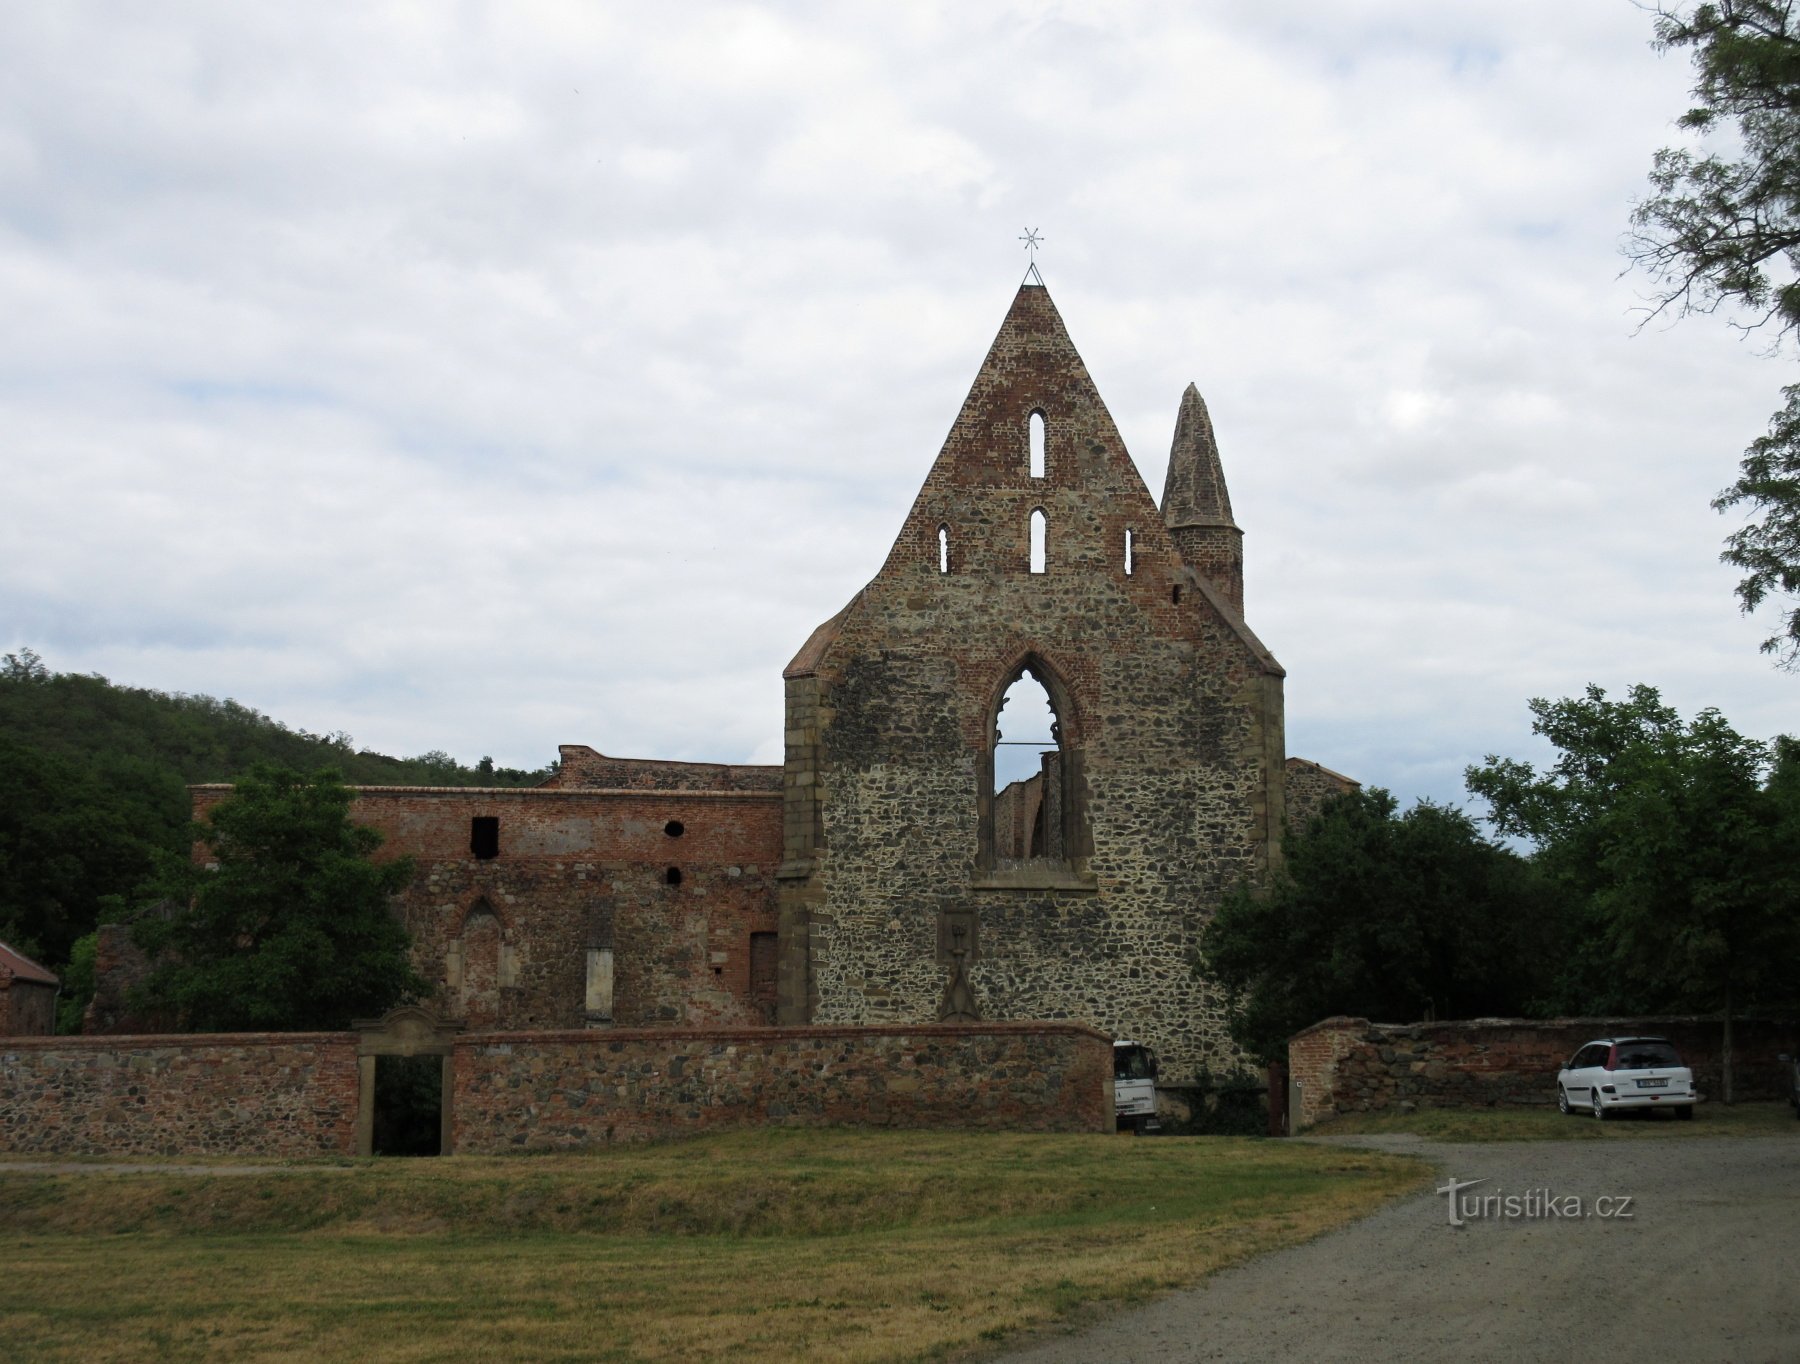 Dolní Kounice – history, monastery ruins, castle, Jewish monuments